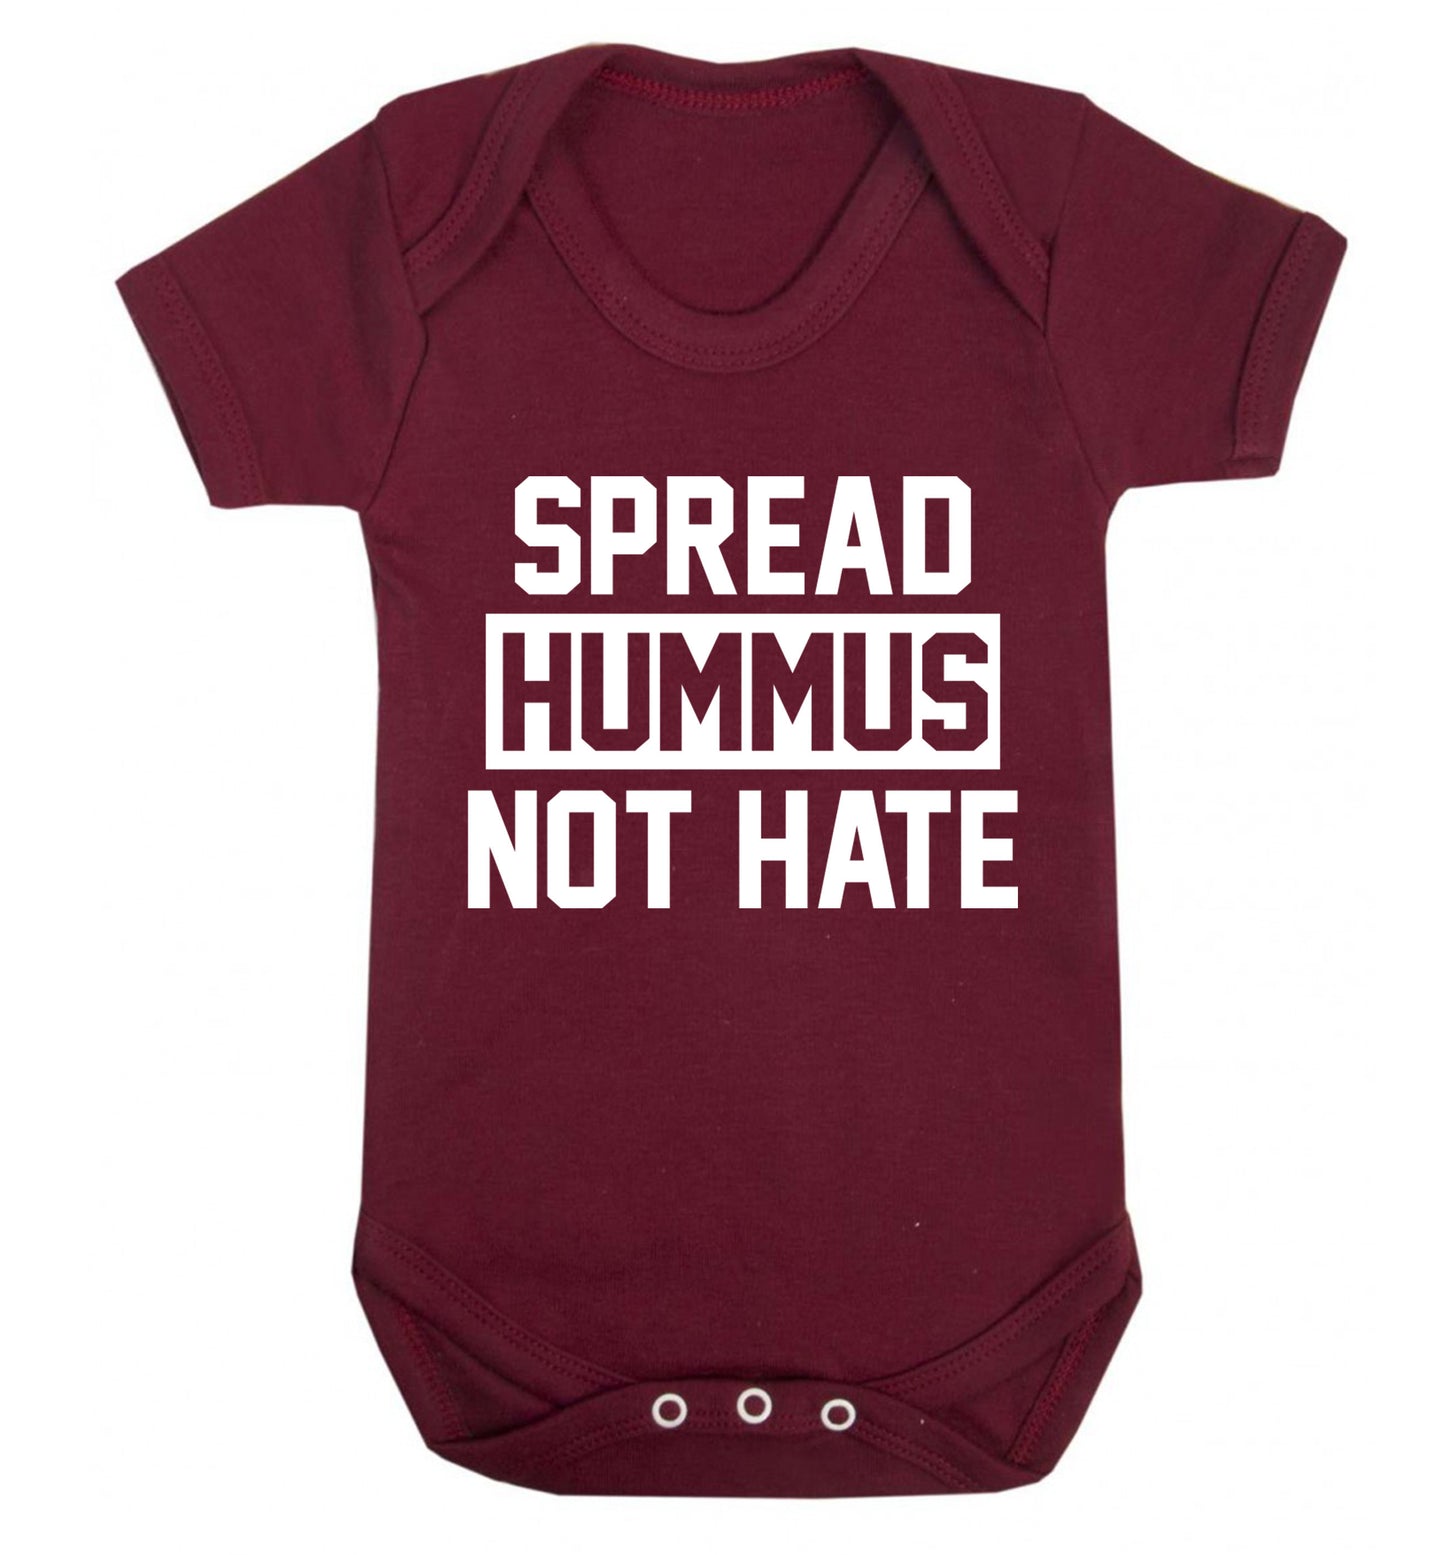 Spread hummus not hate Baby Vest maroon 18-24 months